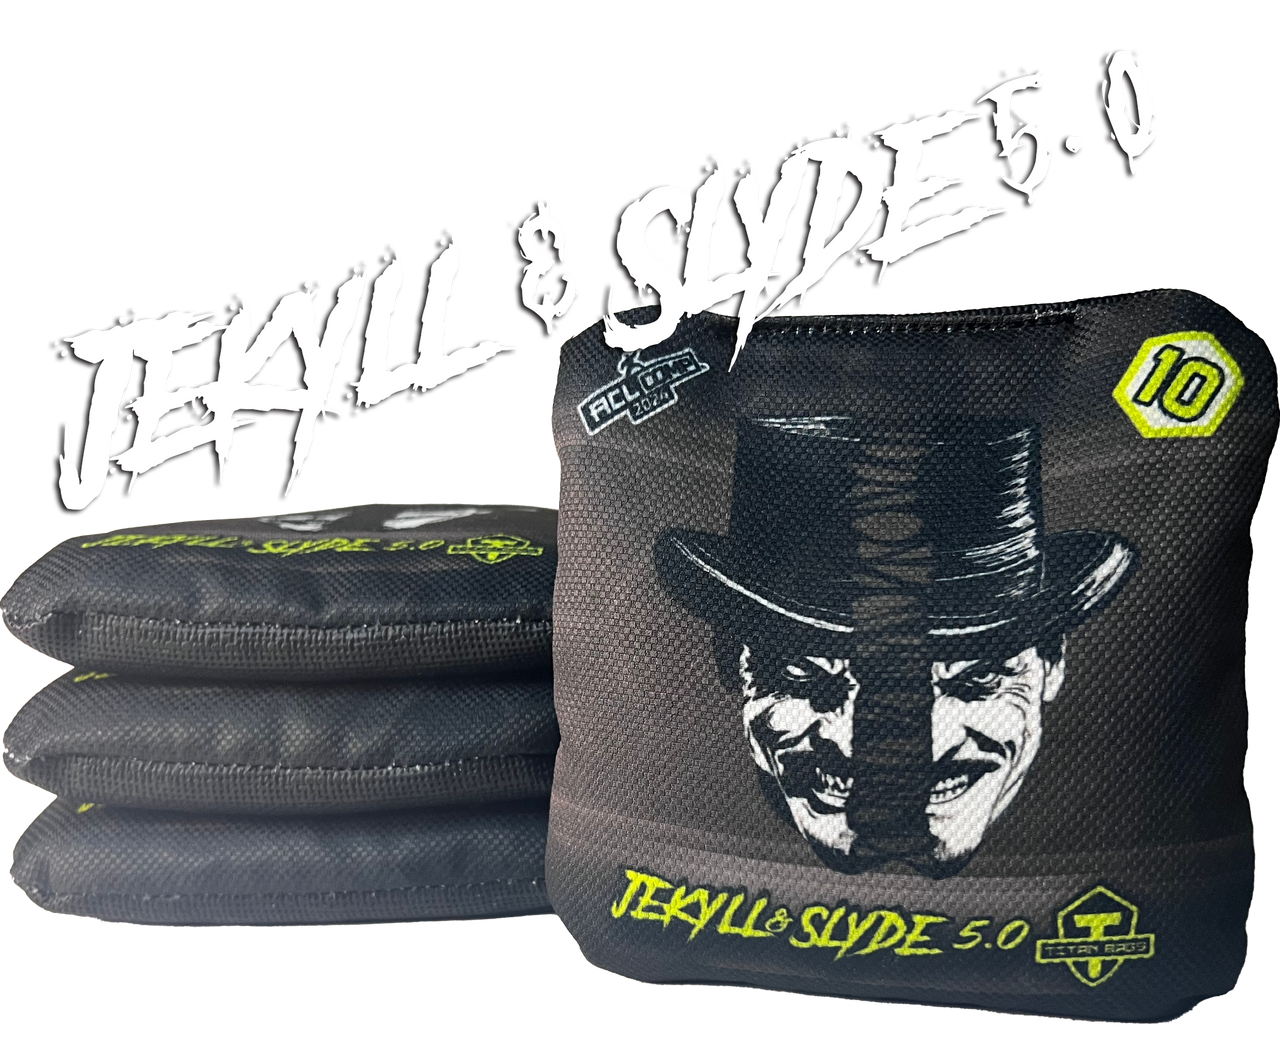 Titan Cornhole Bags - Jekyll & Slyde 5.0